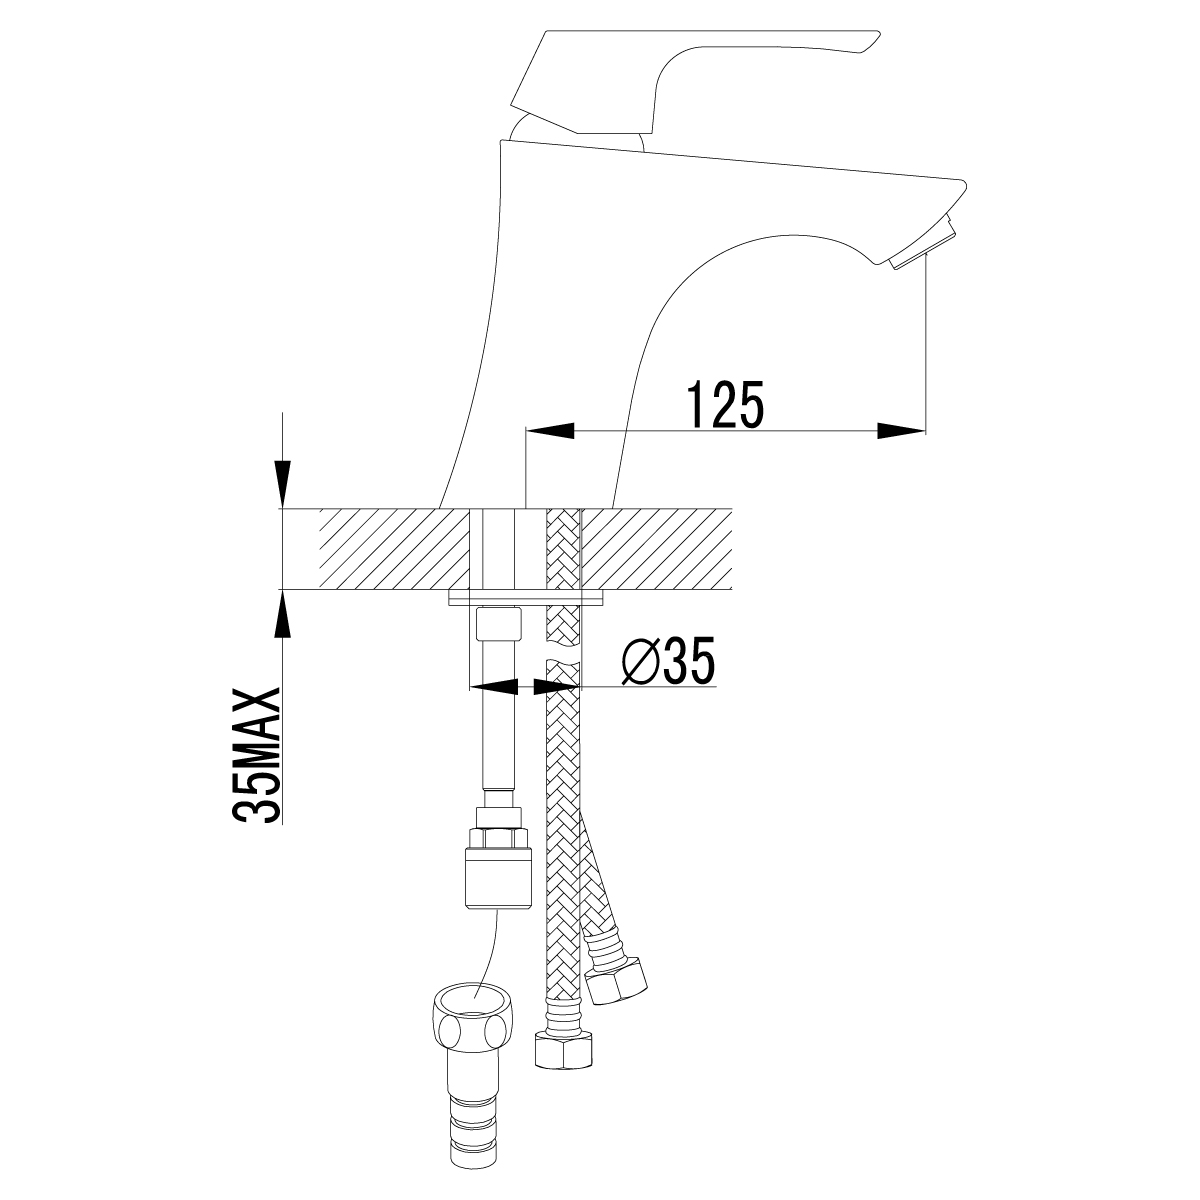 LM4516C Washbasin/bidet faucet